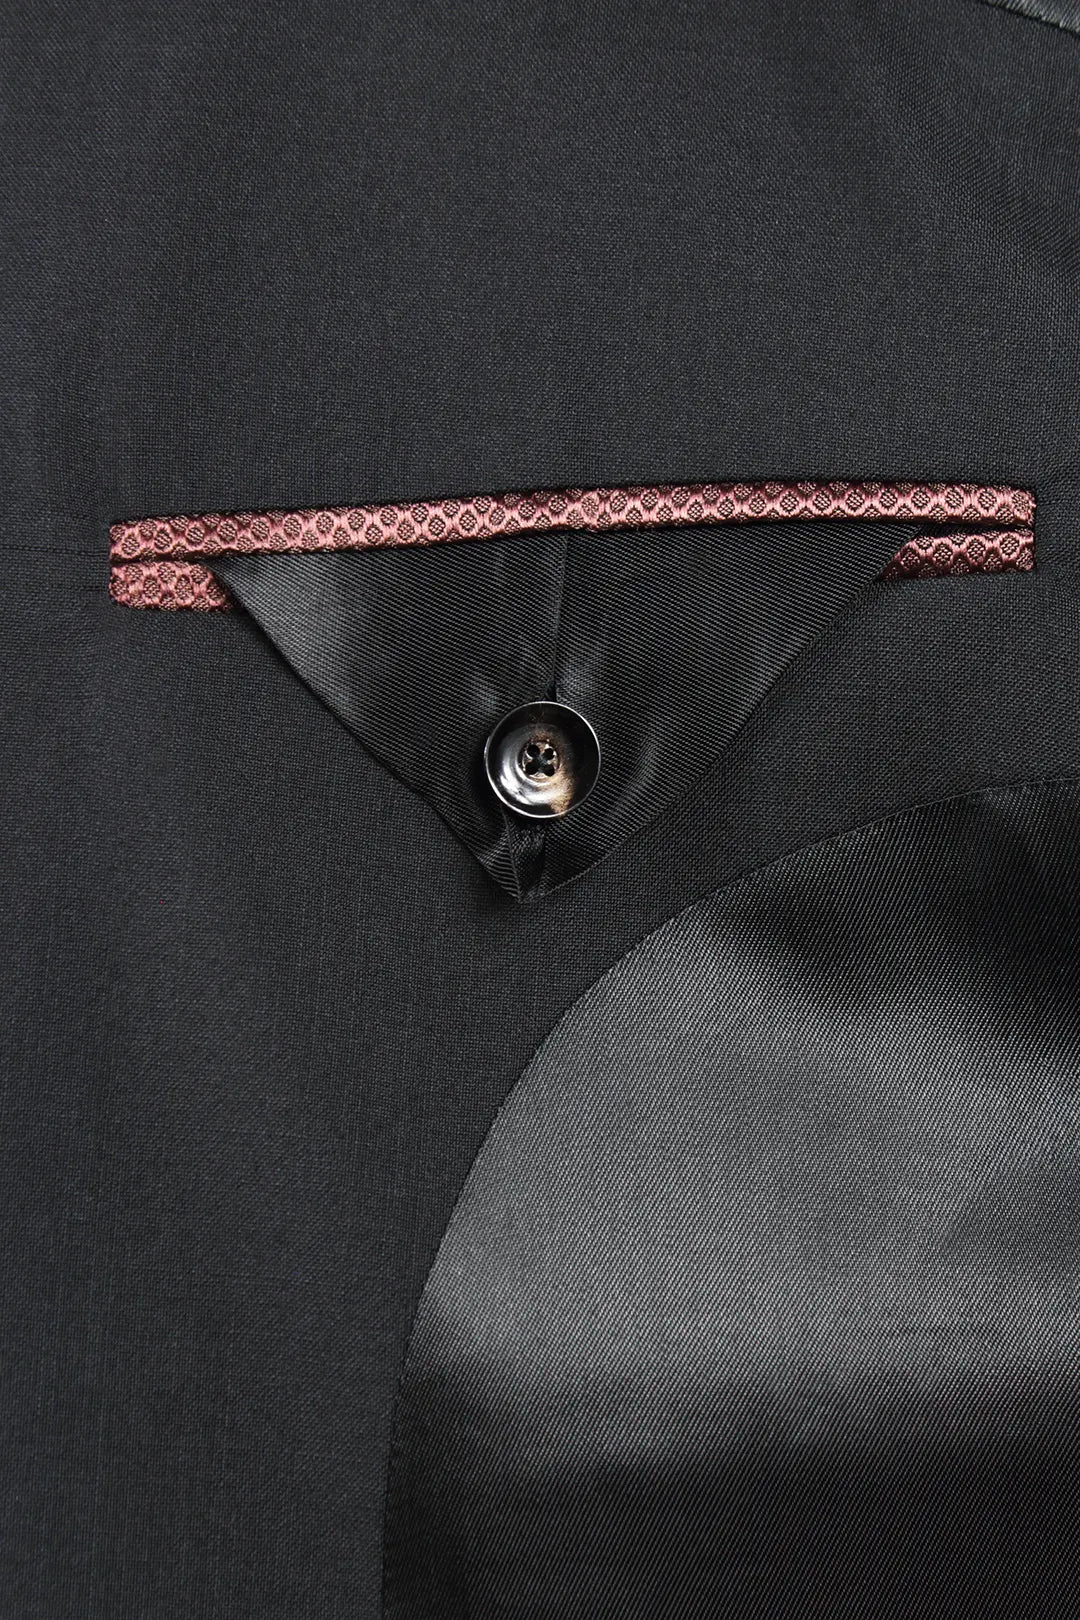 Giacca tela di lana nera rever profilato rame interno